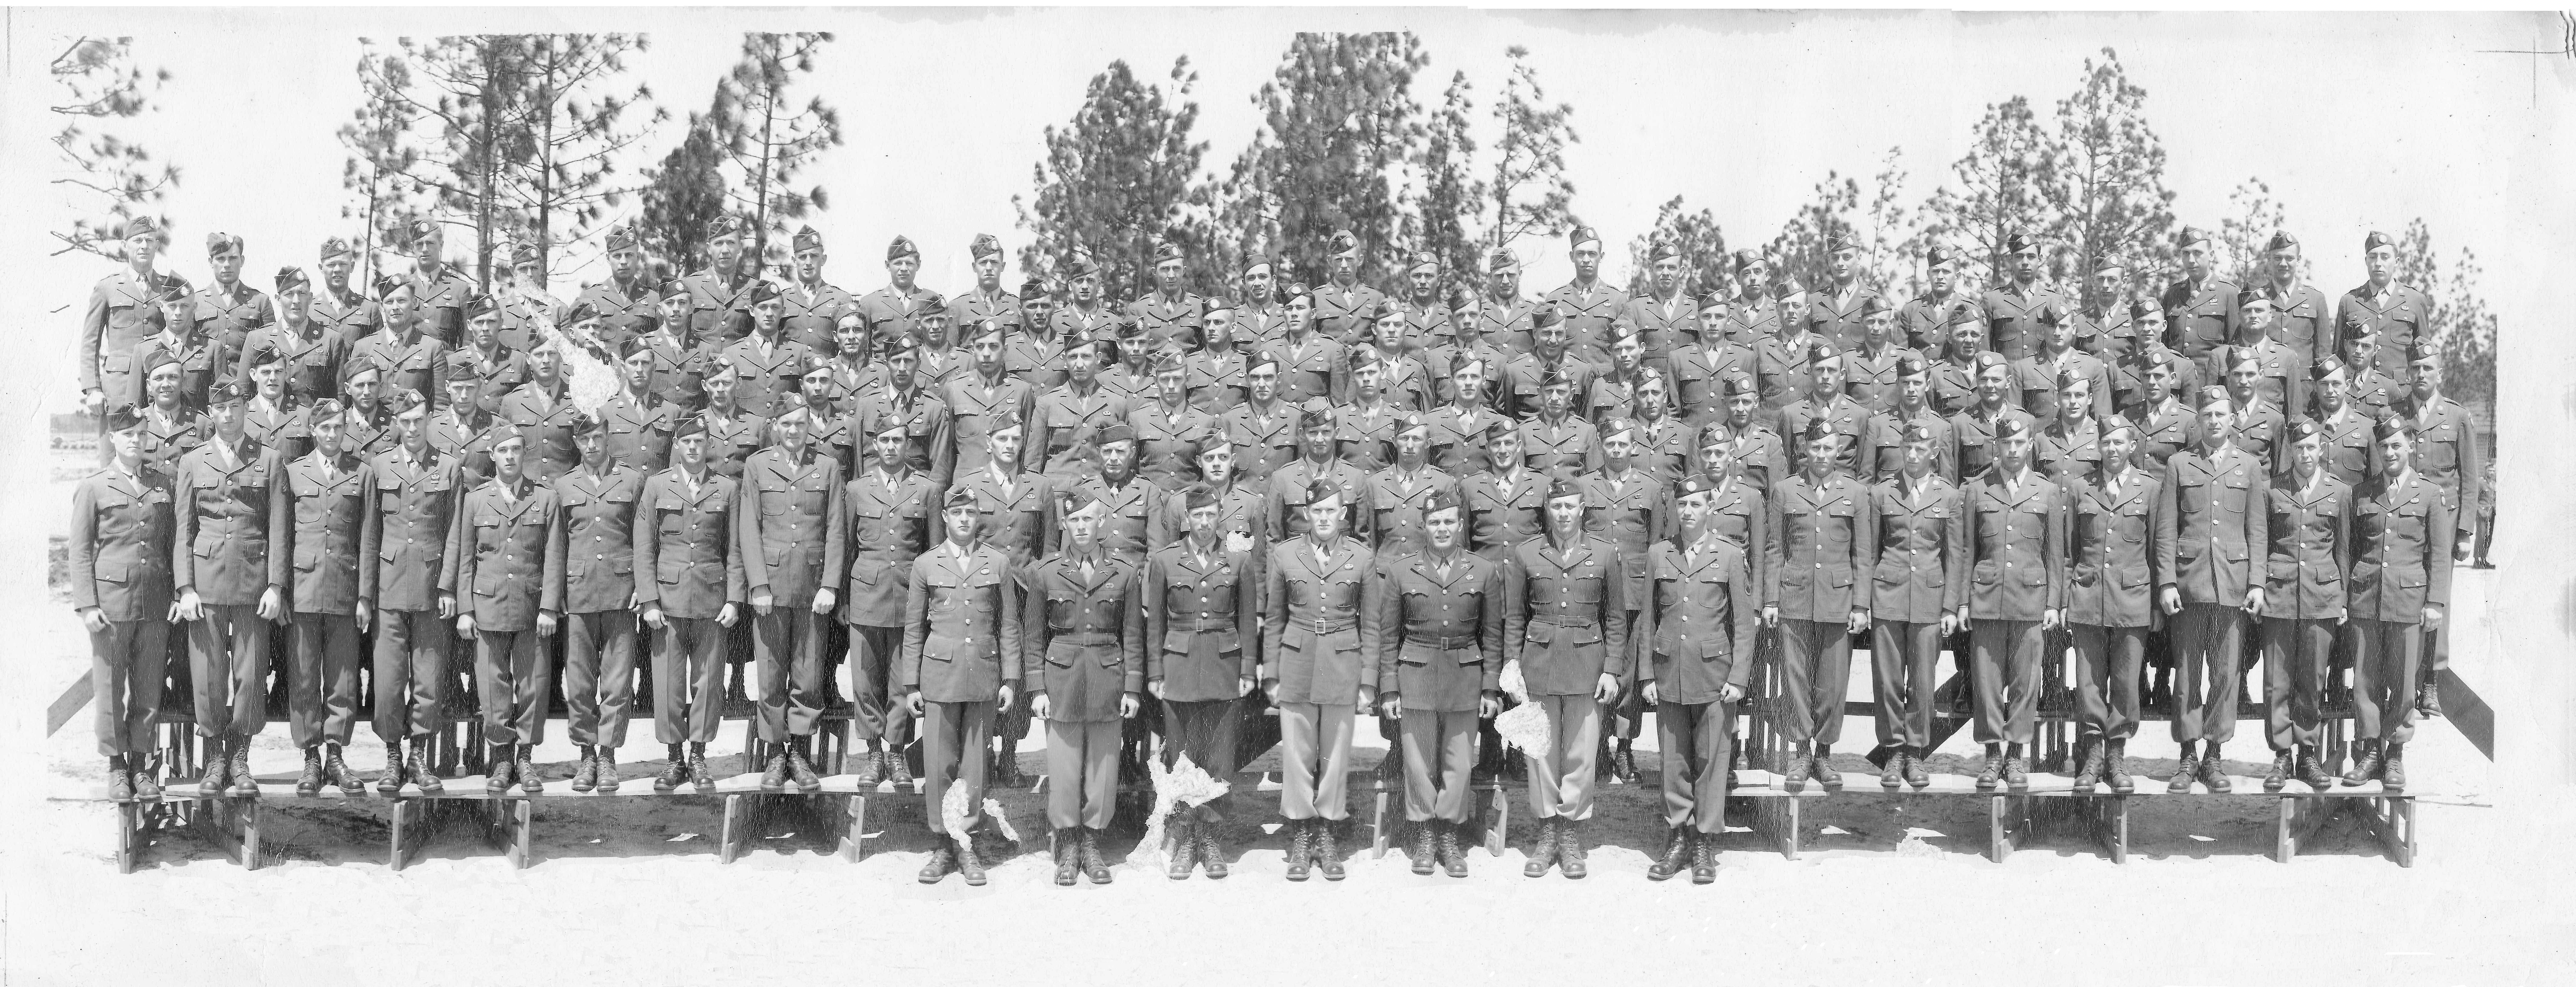 I Company  stateside photograph at Fort Bragg